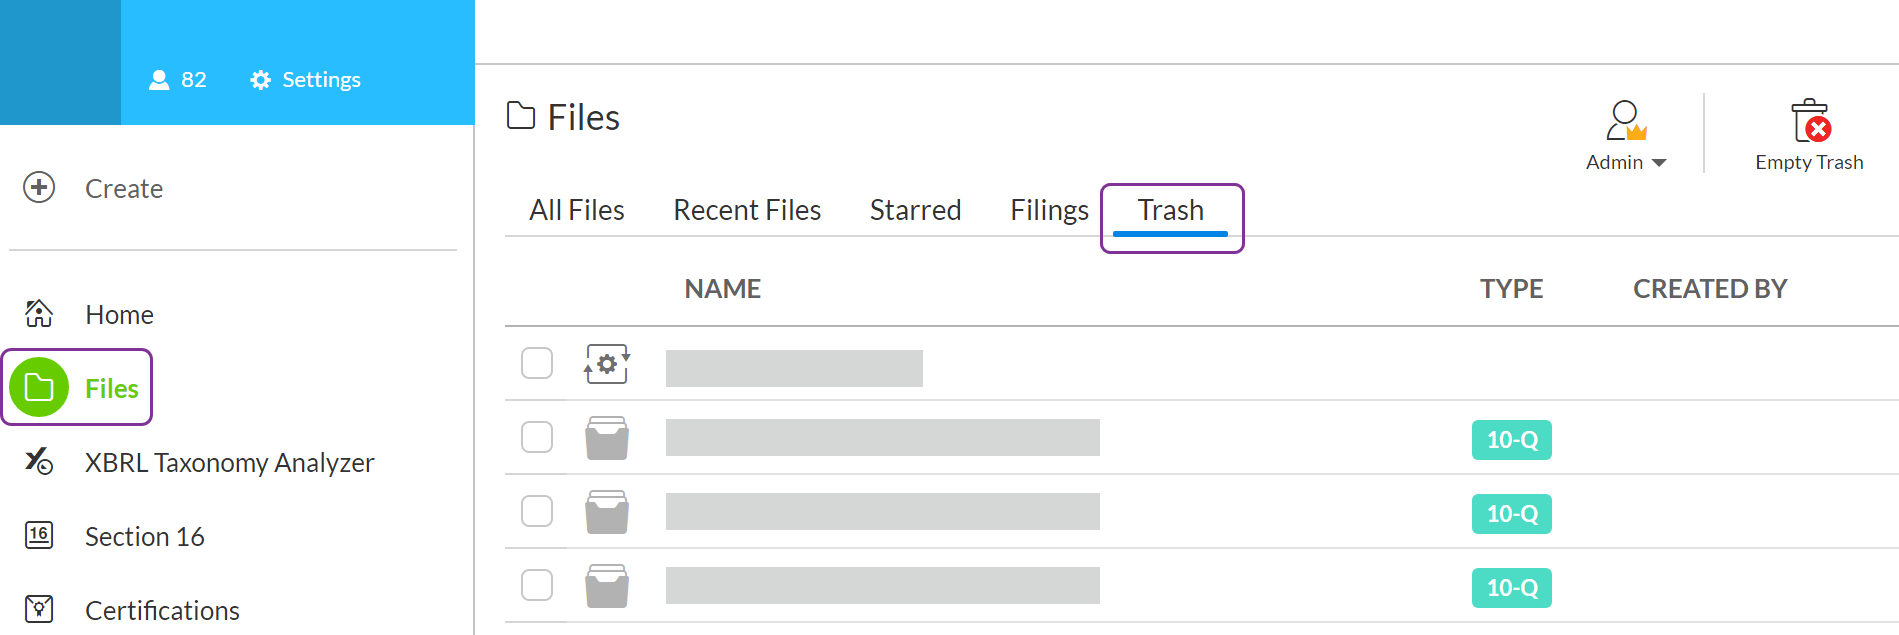 Files-Trash.png